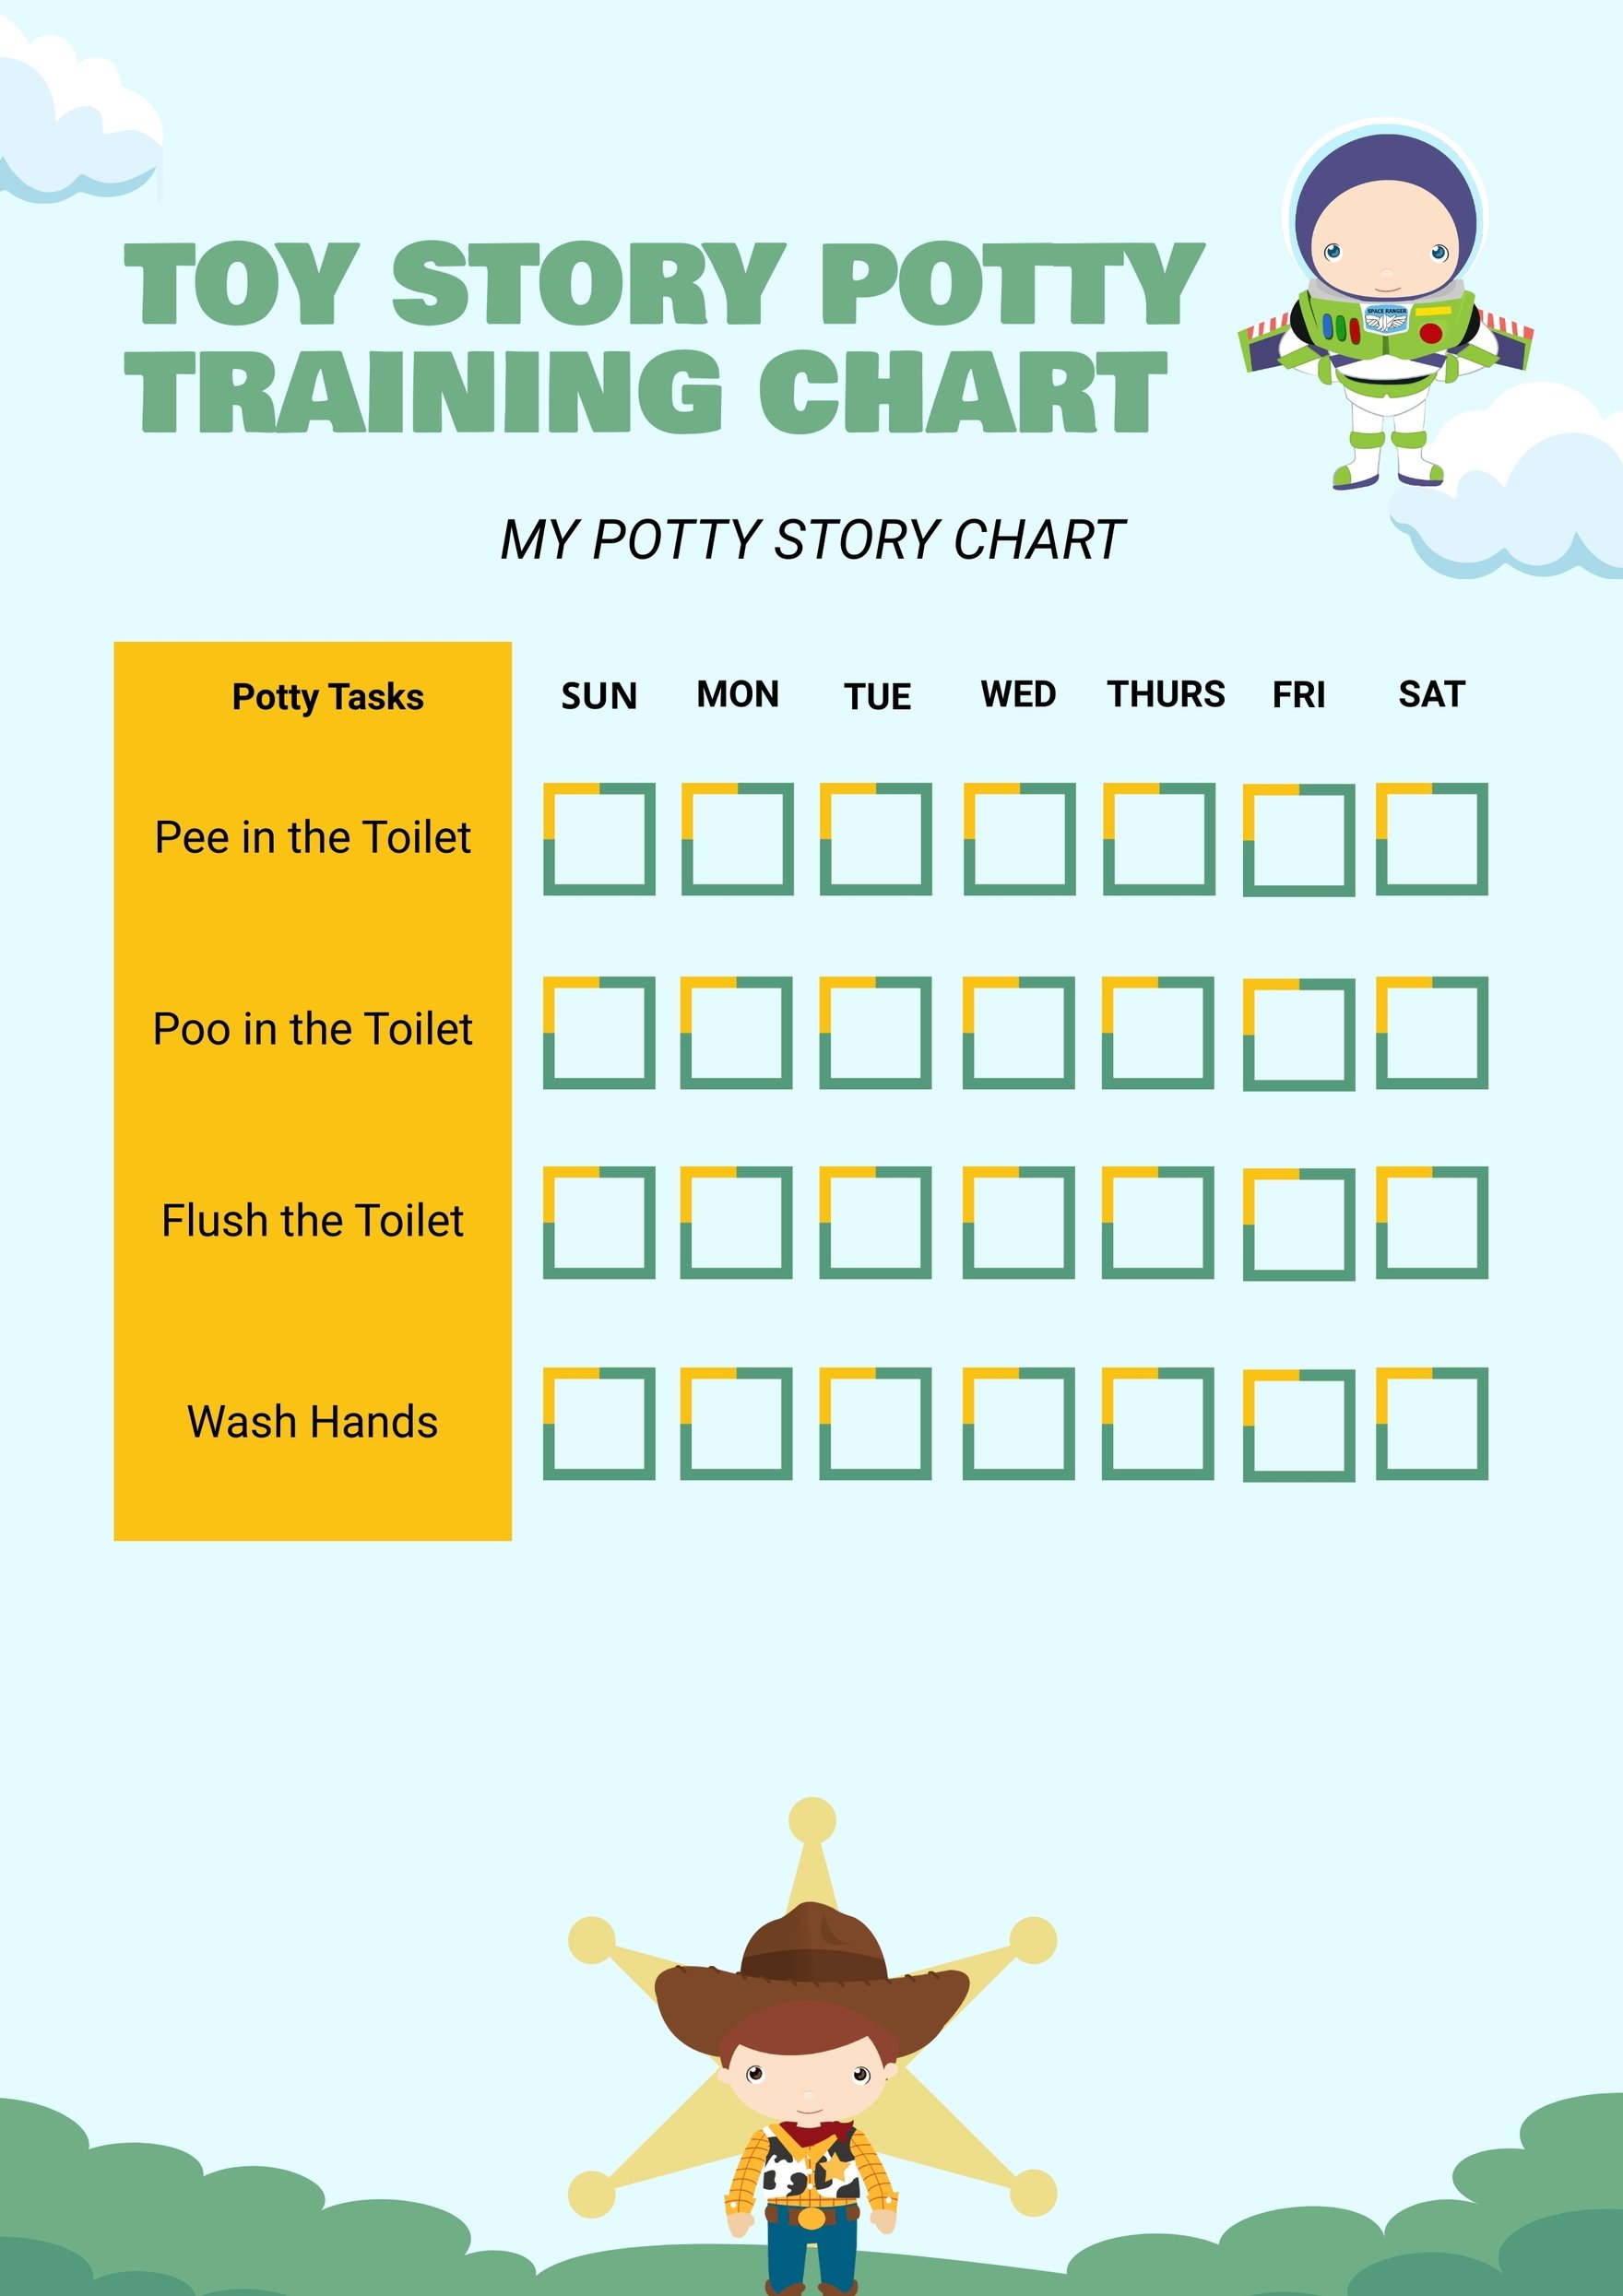 Toy Story Potty Training Chart in PDF, Illustrator